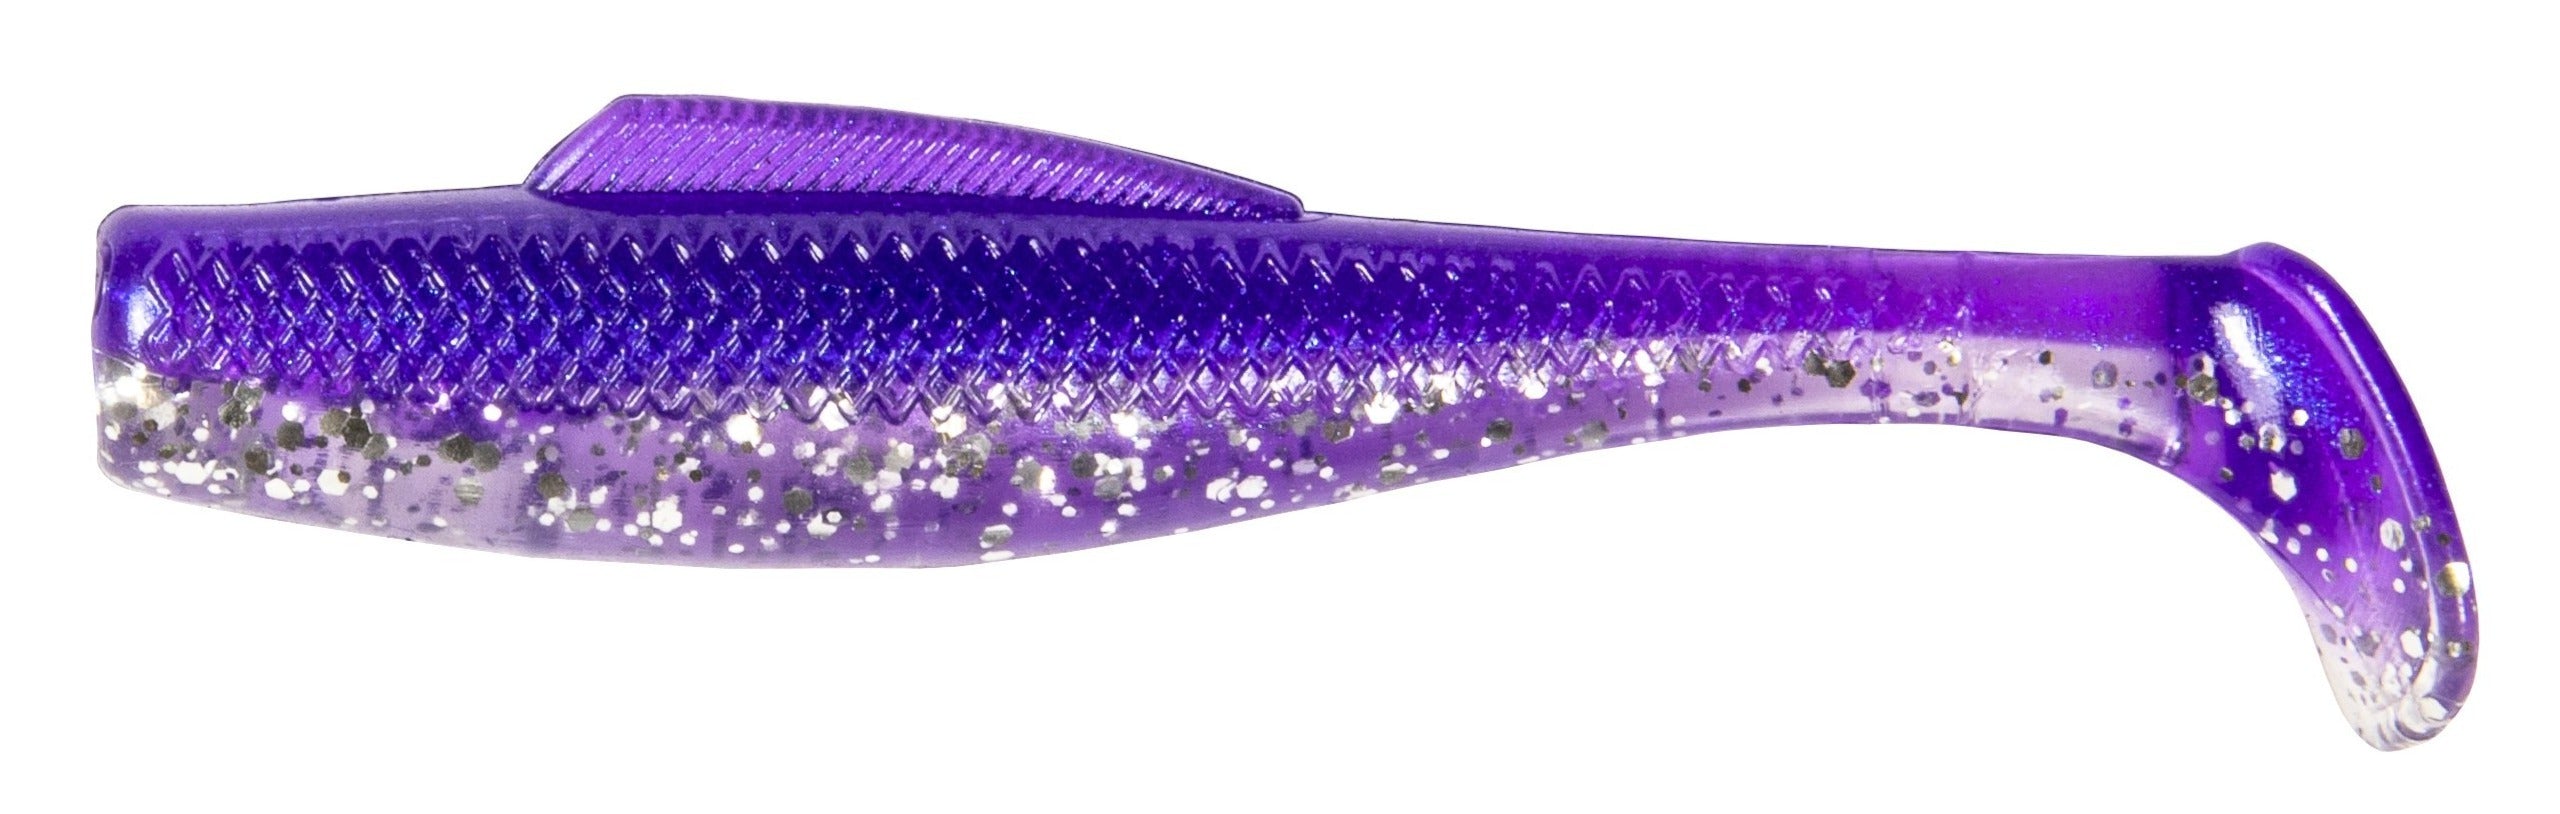 Fishing Swimbaits Soft Plastic Paddle Tail Shad 2.76-3.9 Minnow Lure Bass  – Contino